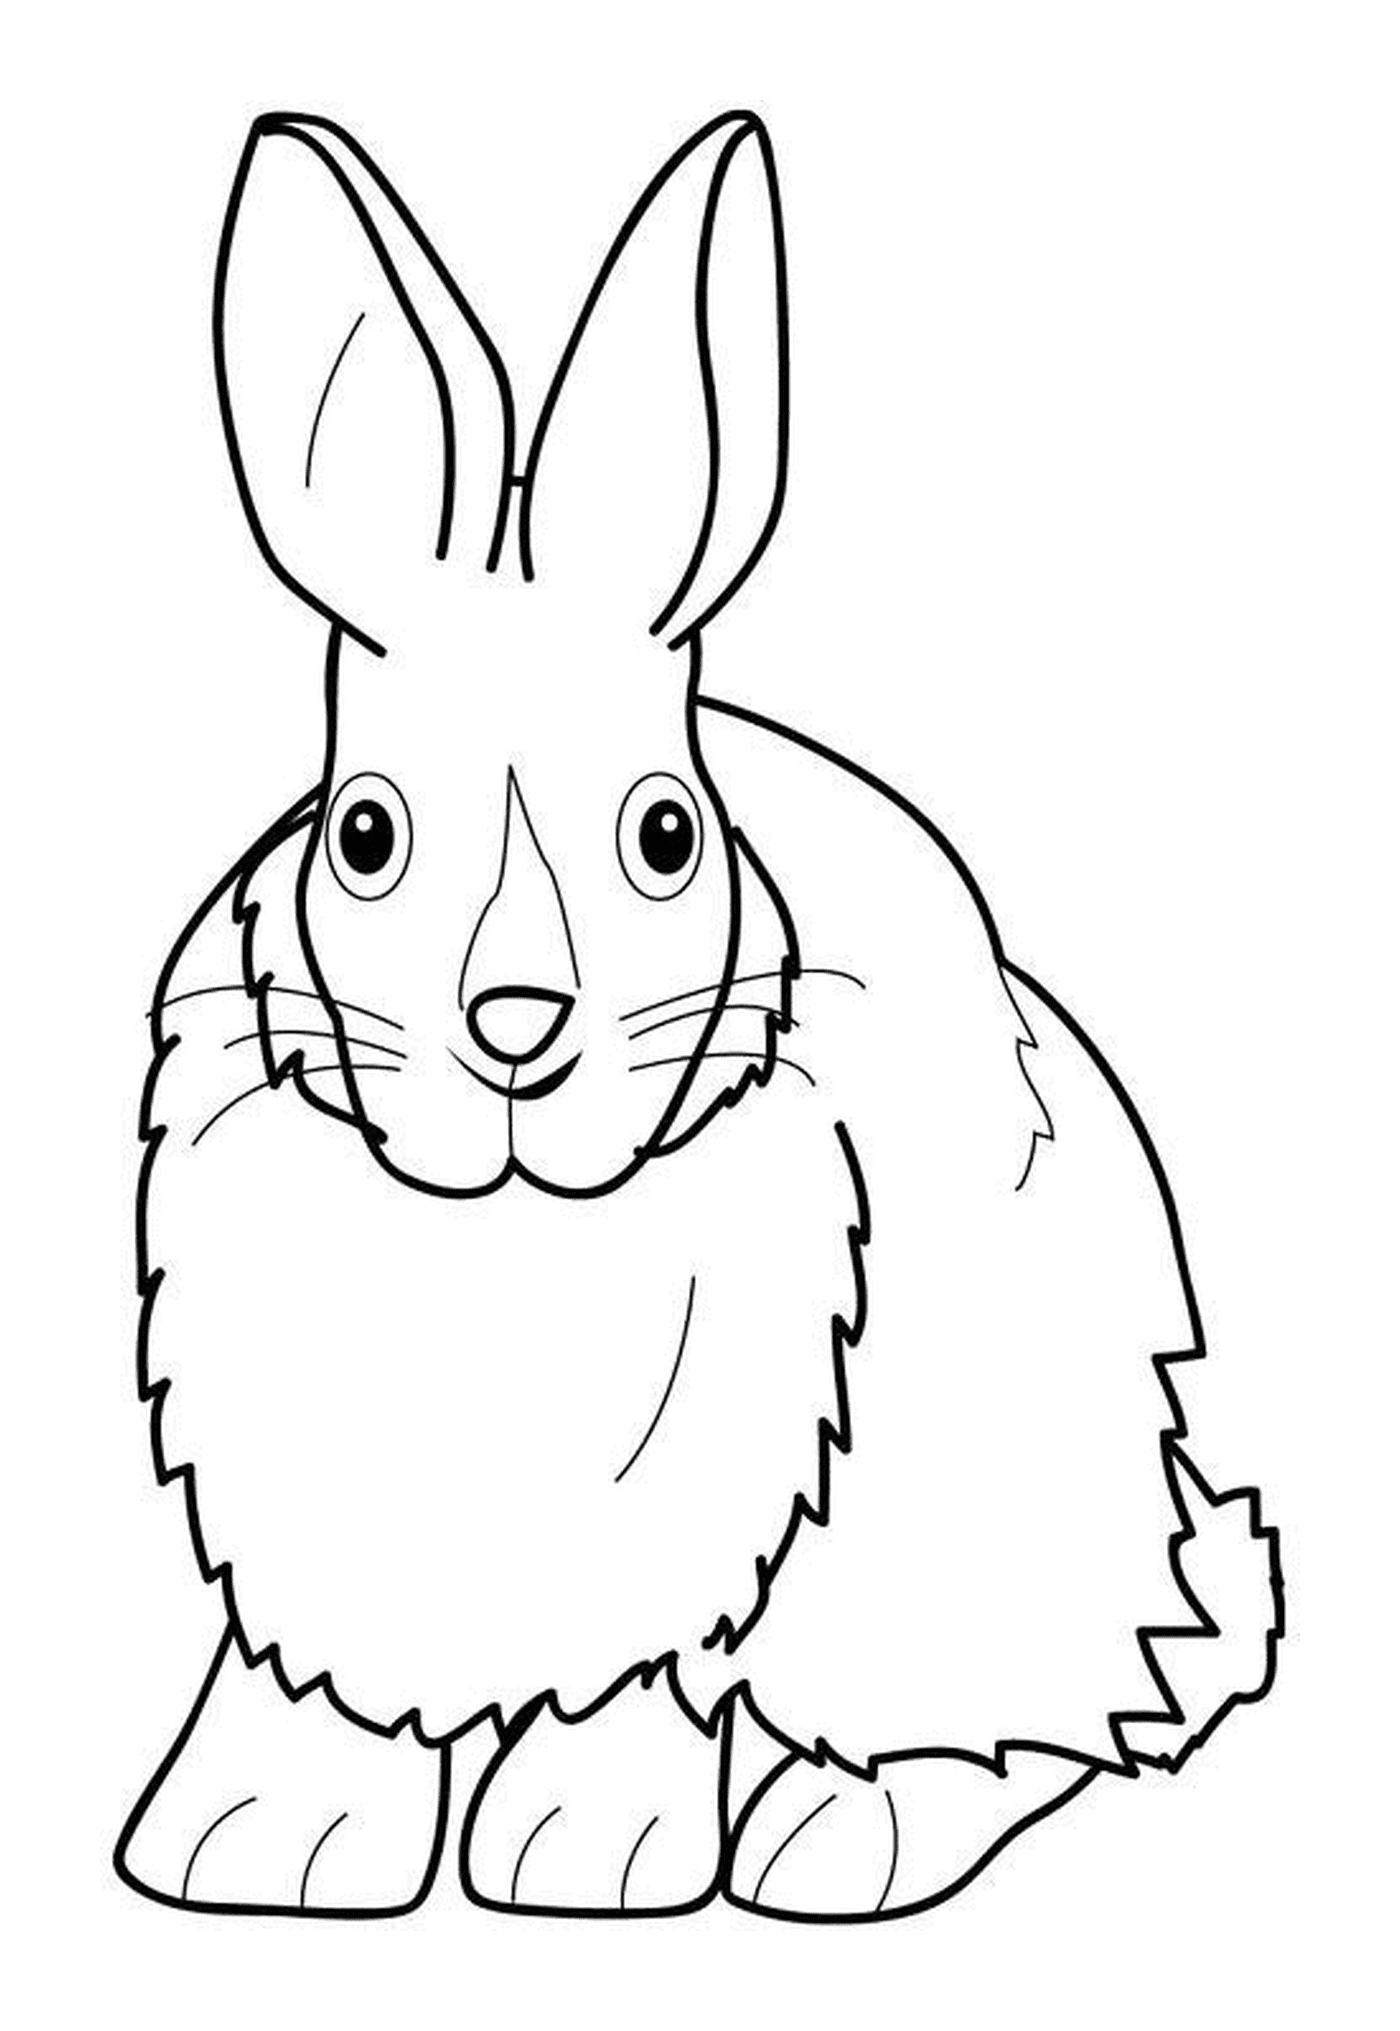  Lindo pequeño conejo peludo 